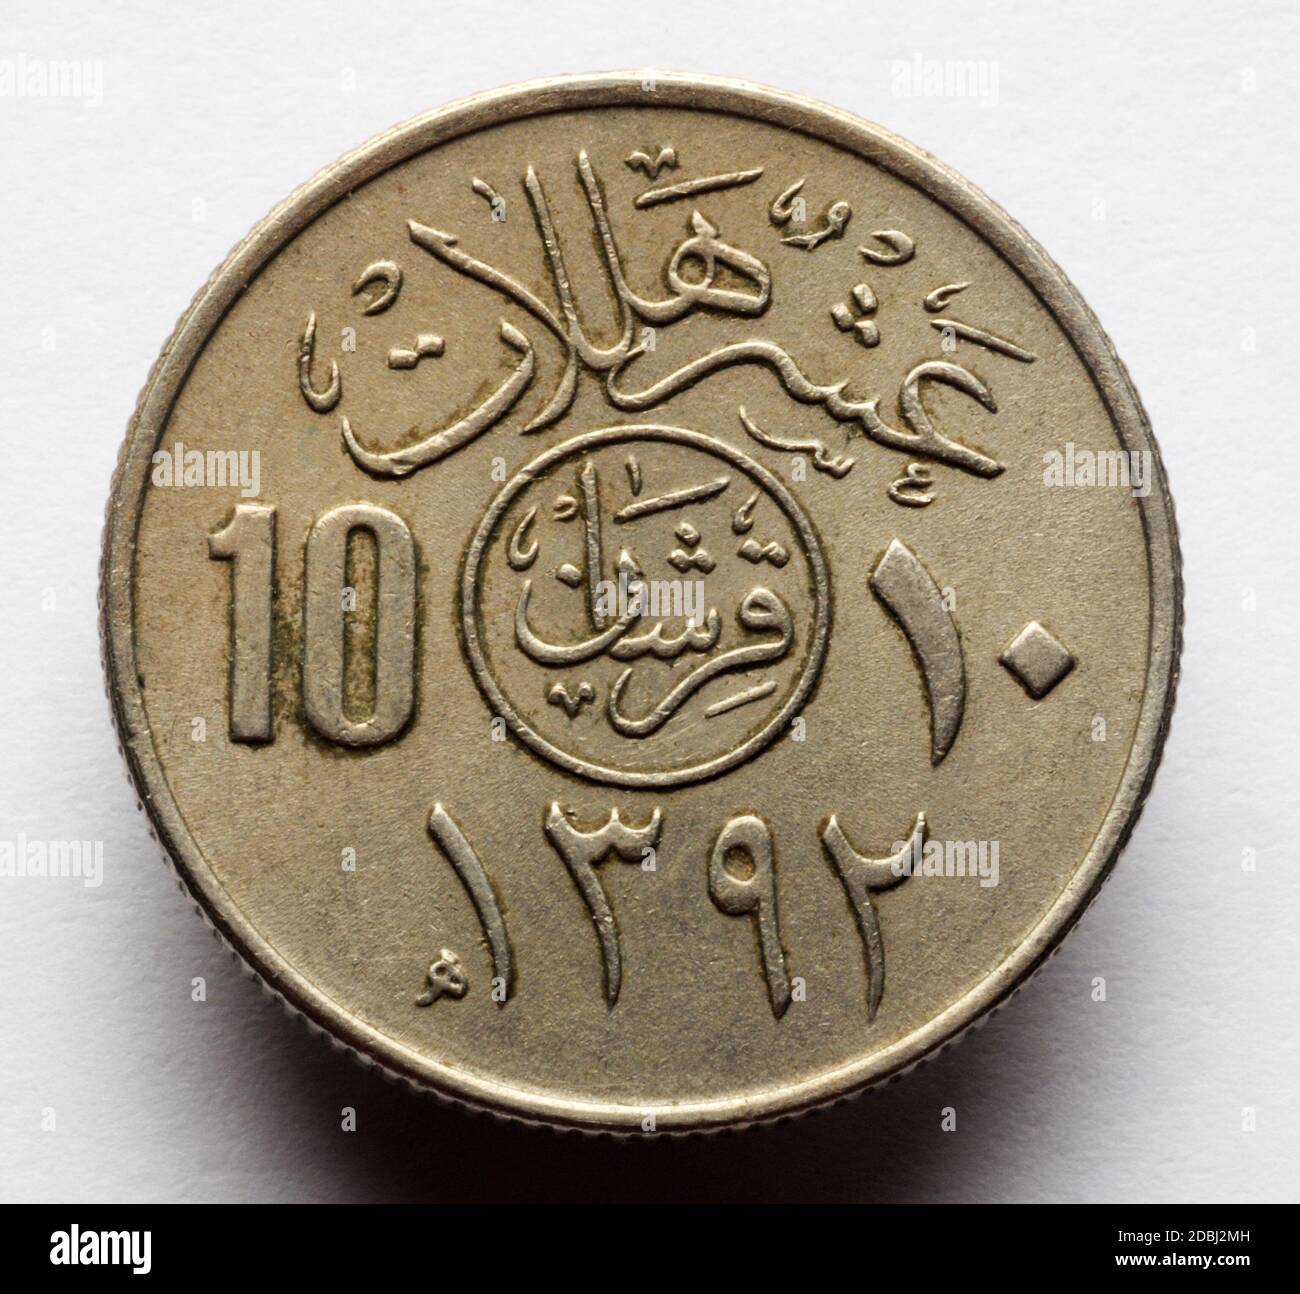 50 & 100 HALALA SAUDI ARABIA COIN PAIR 